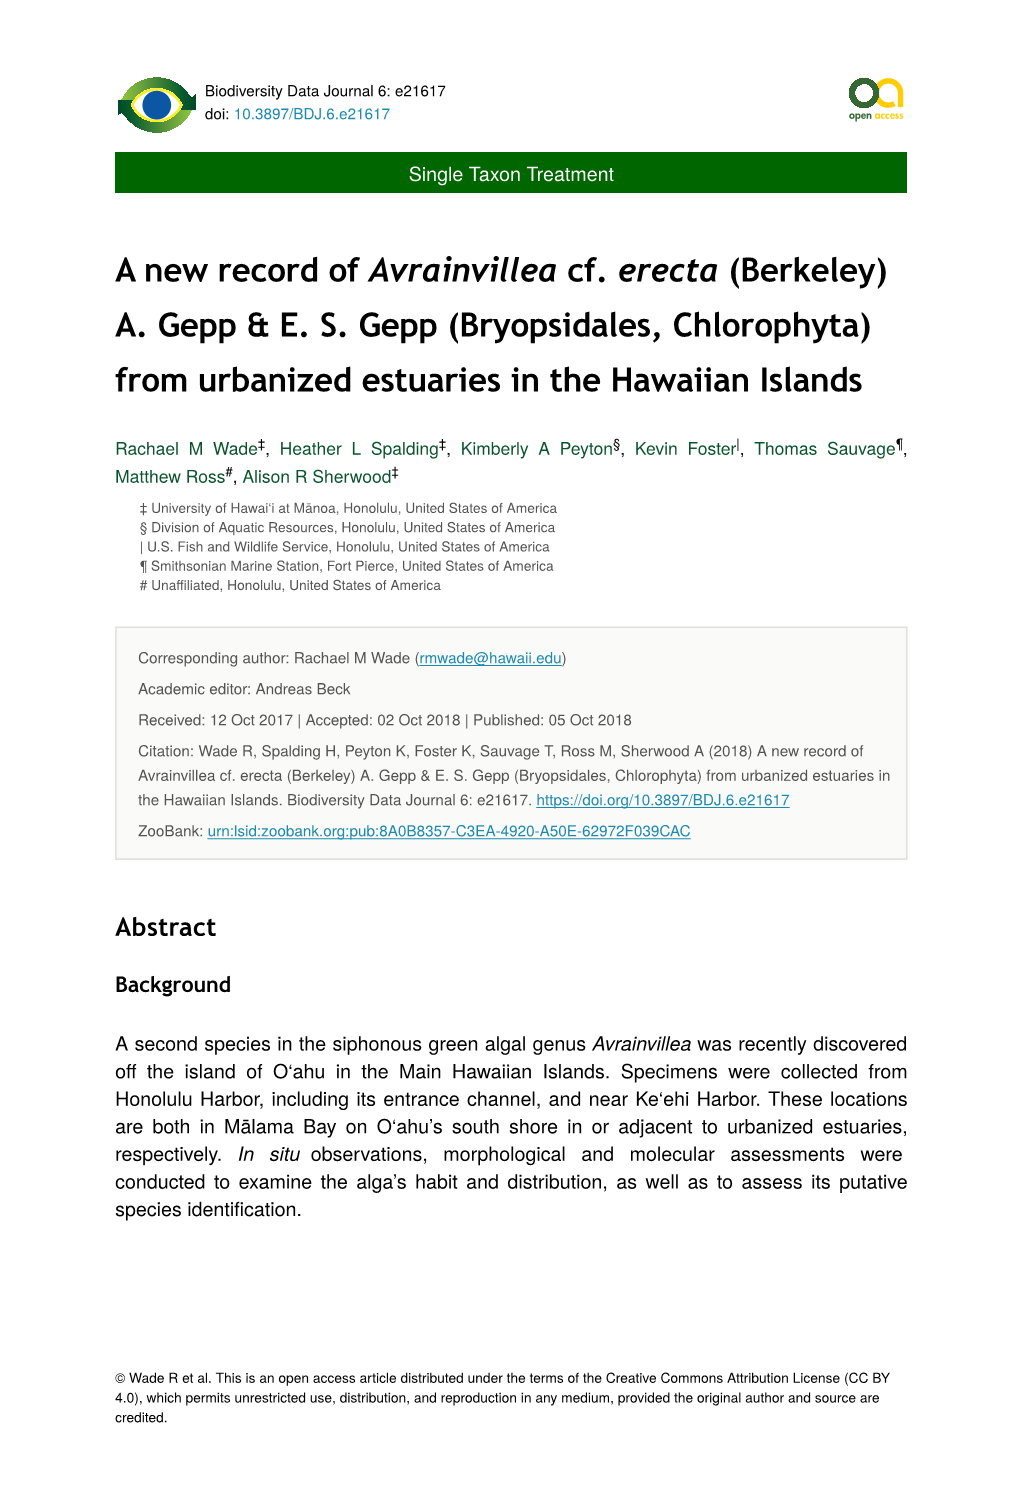 A New Record of Avrainvillea Cf. Erecta (Berkeley) A. Gepp & E. S. Gepp (Bryopsidales, Chlorophyta) from Urbanized Estuaries